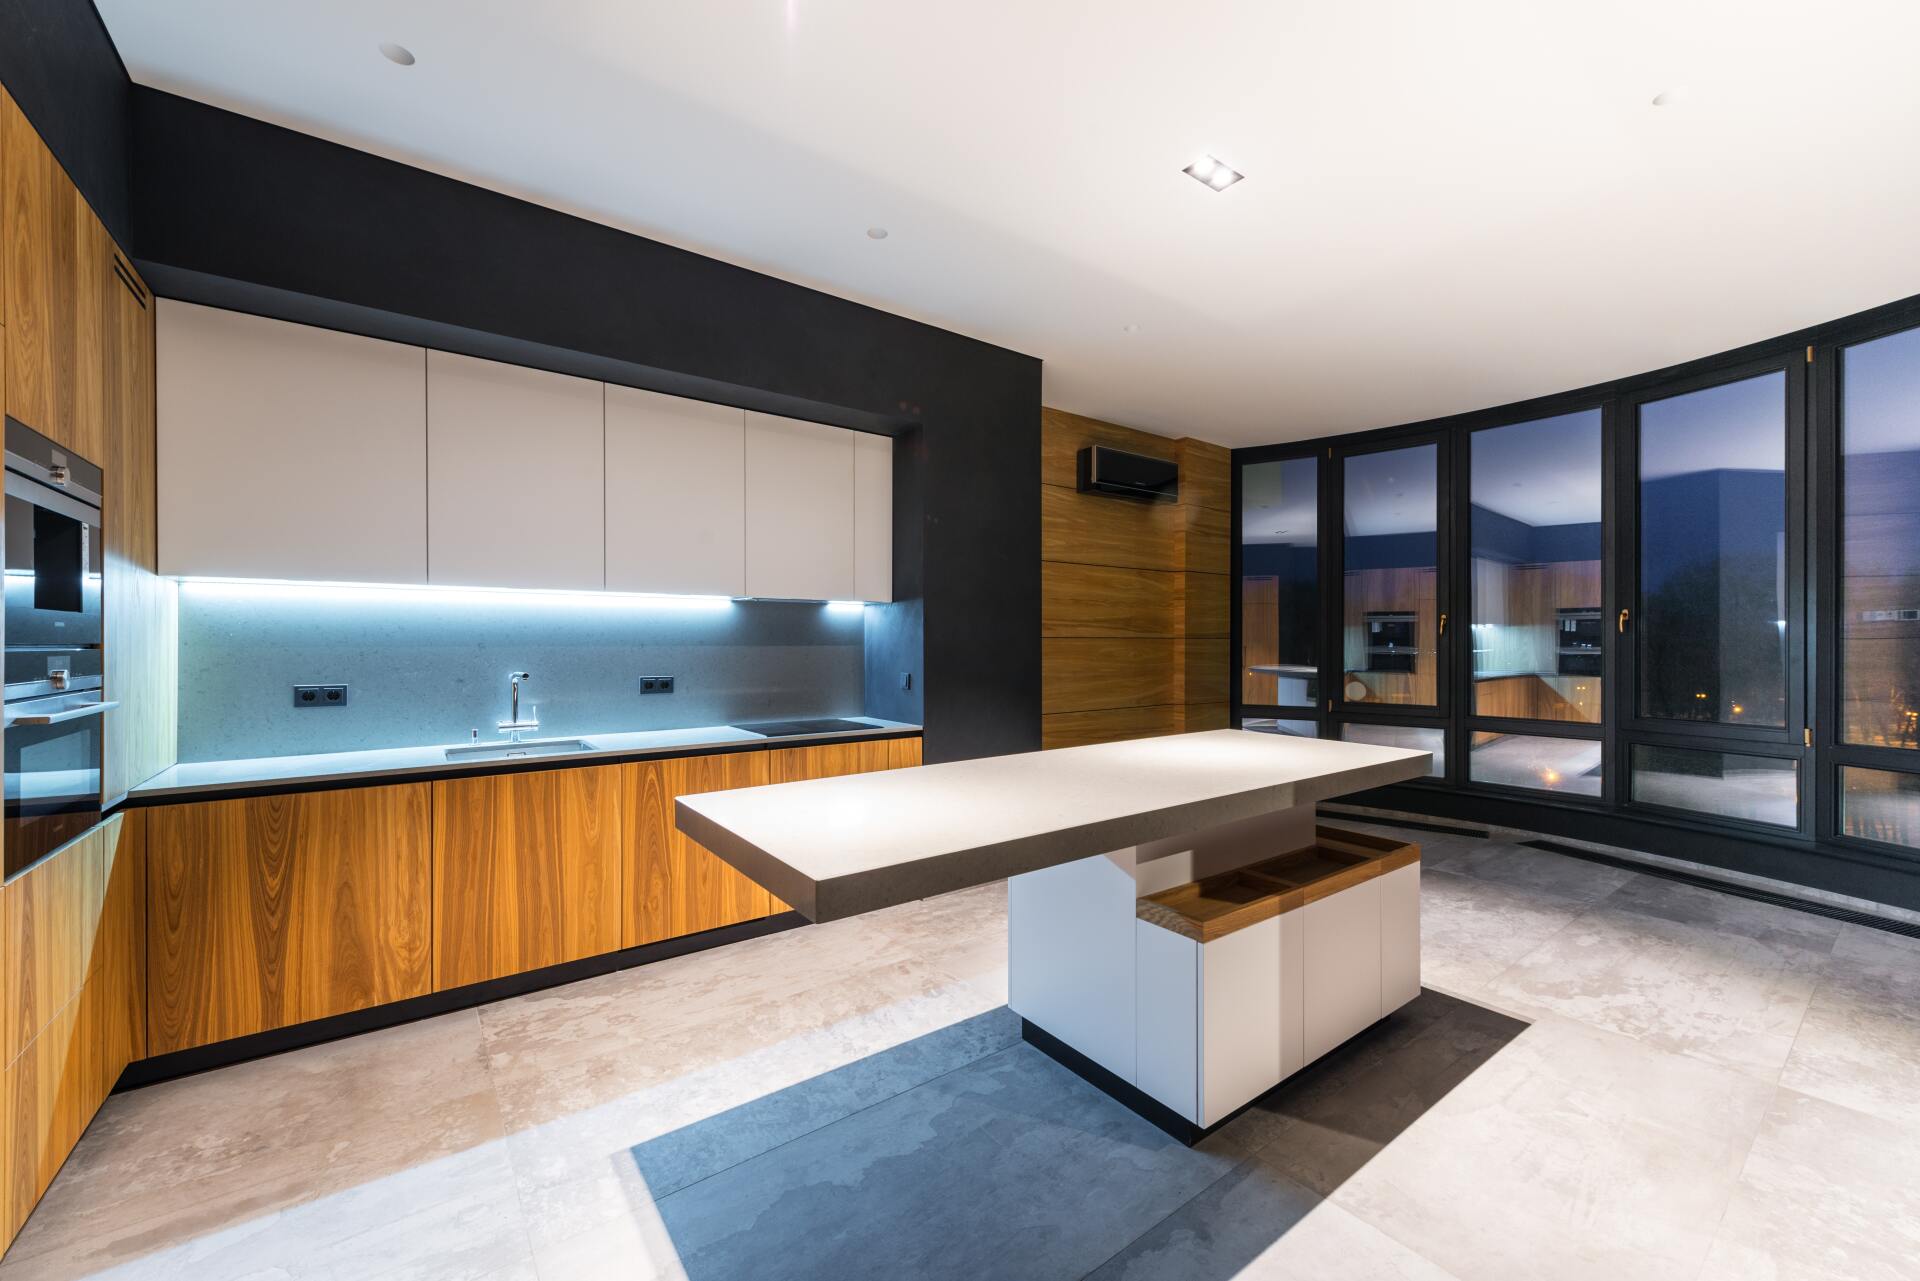 A modern kitchen with under cabinet lighting